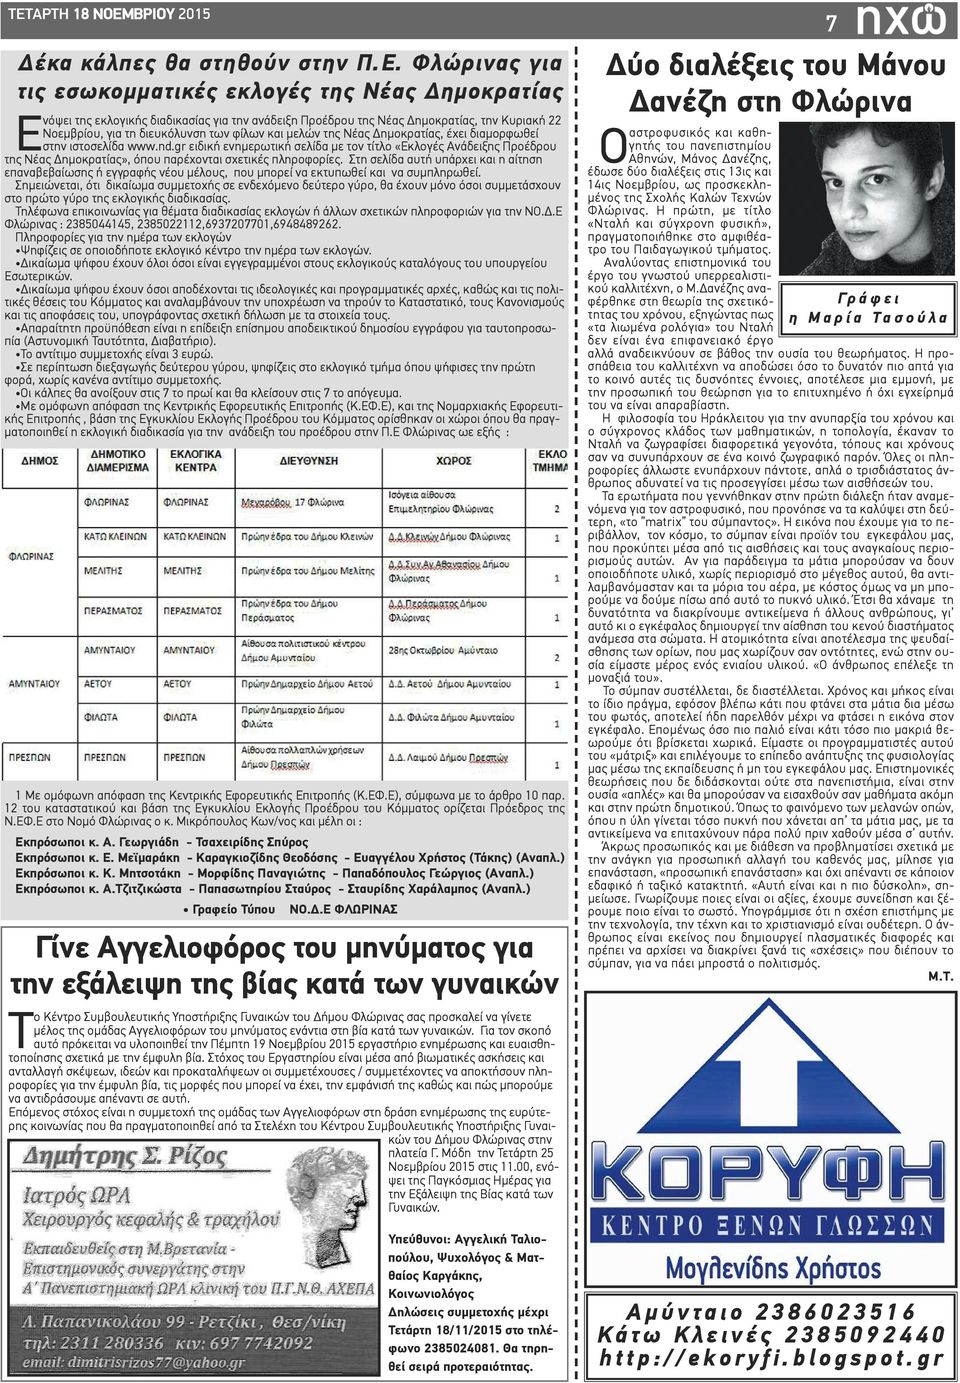 gr ειδική ενημερωτική σελίδα με τον τίτλο «Εκλογές Ανάδειξης Προέδρου της Νέας Δημοκρατίας», όπου παρέχονται σχετικές πληροφορίες.